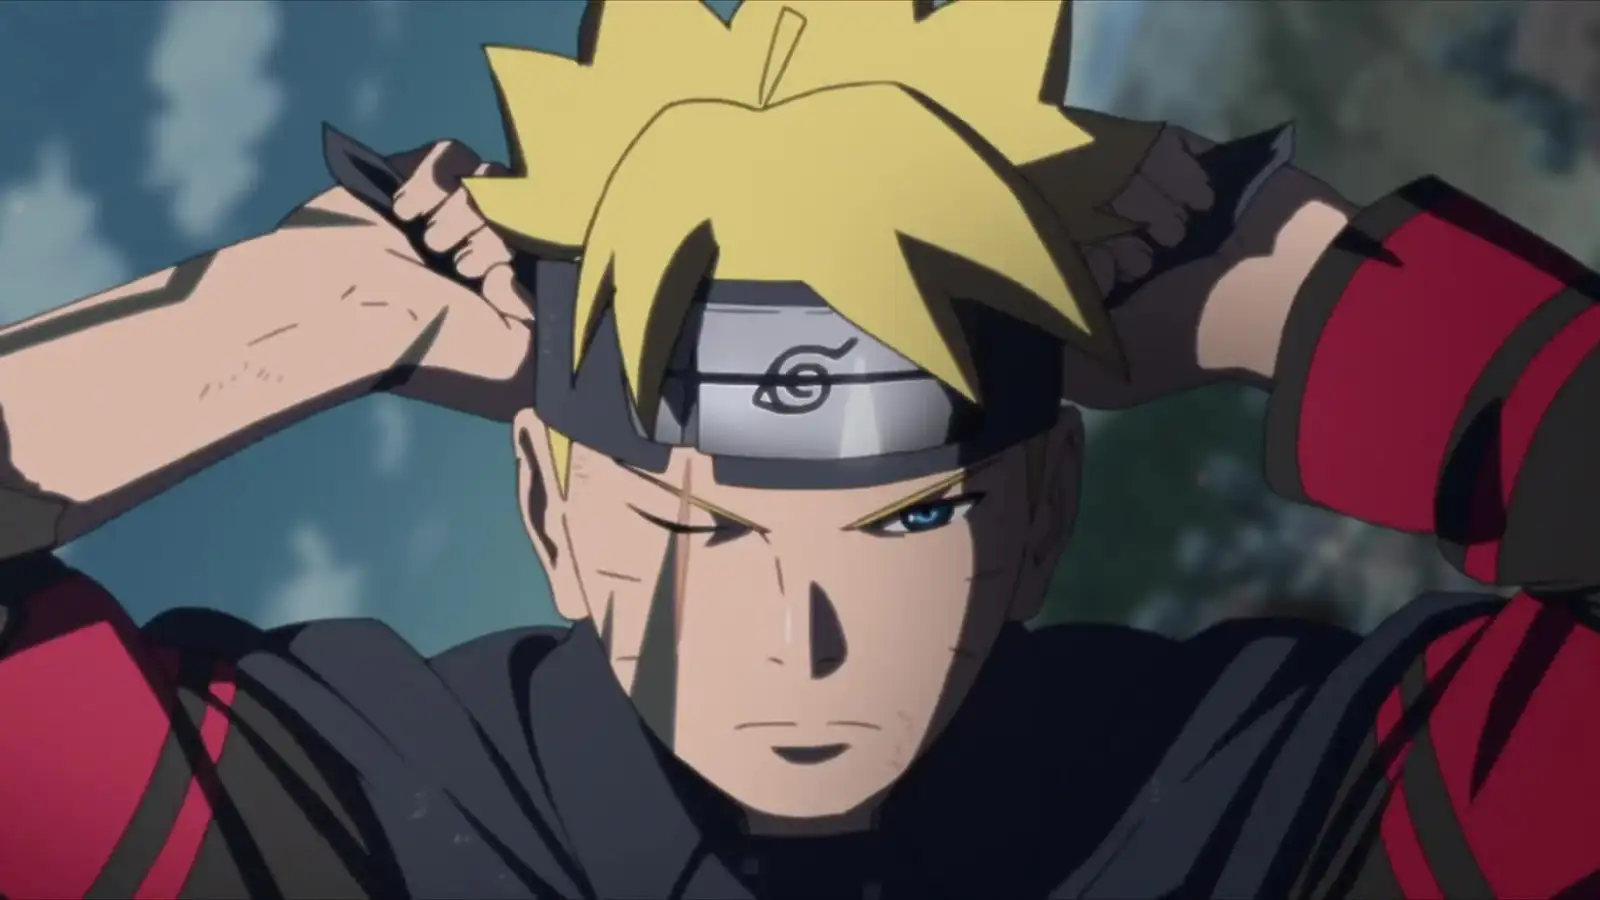 Boruto: Naruto the Movie's New Manga One-Shot Previewed - News - Anime News  Network